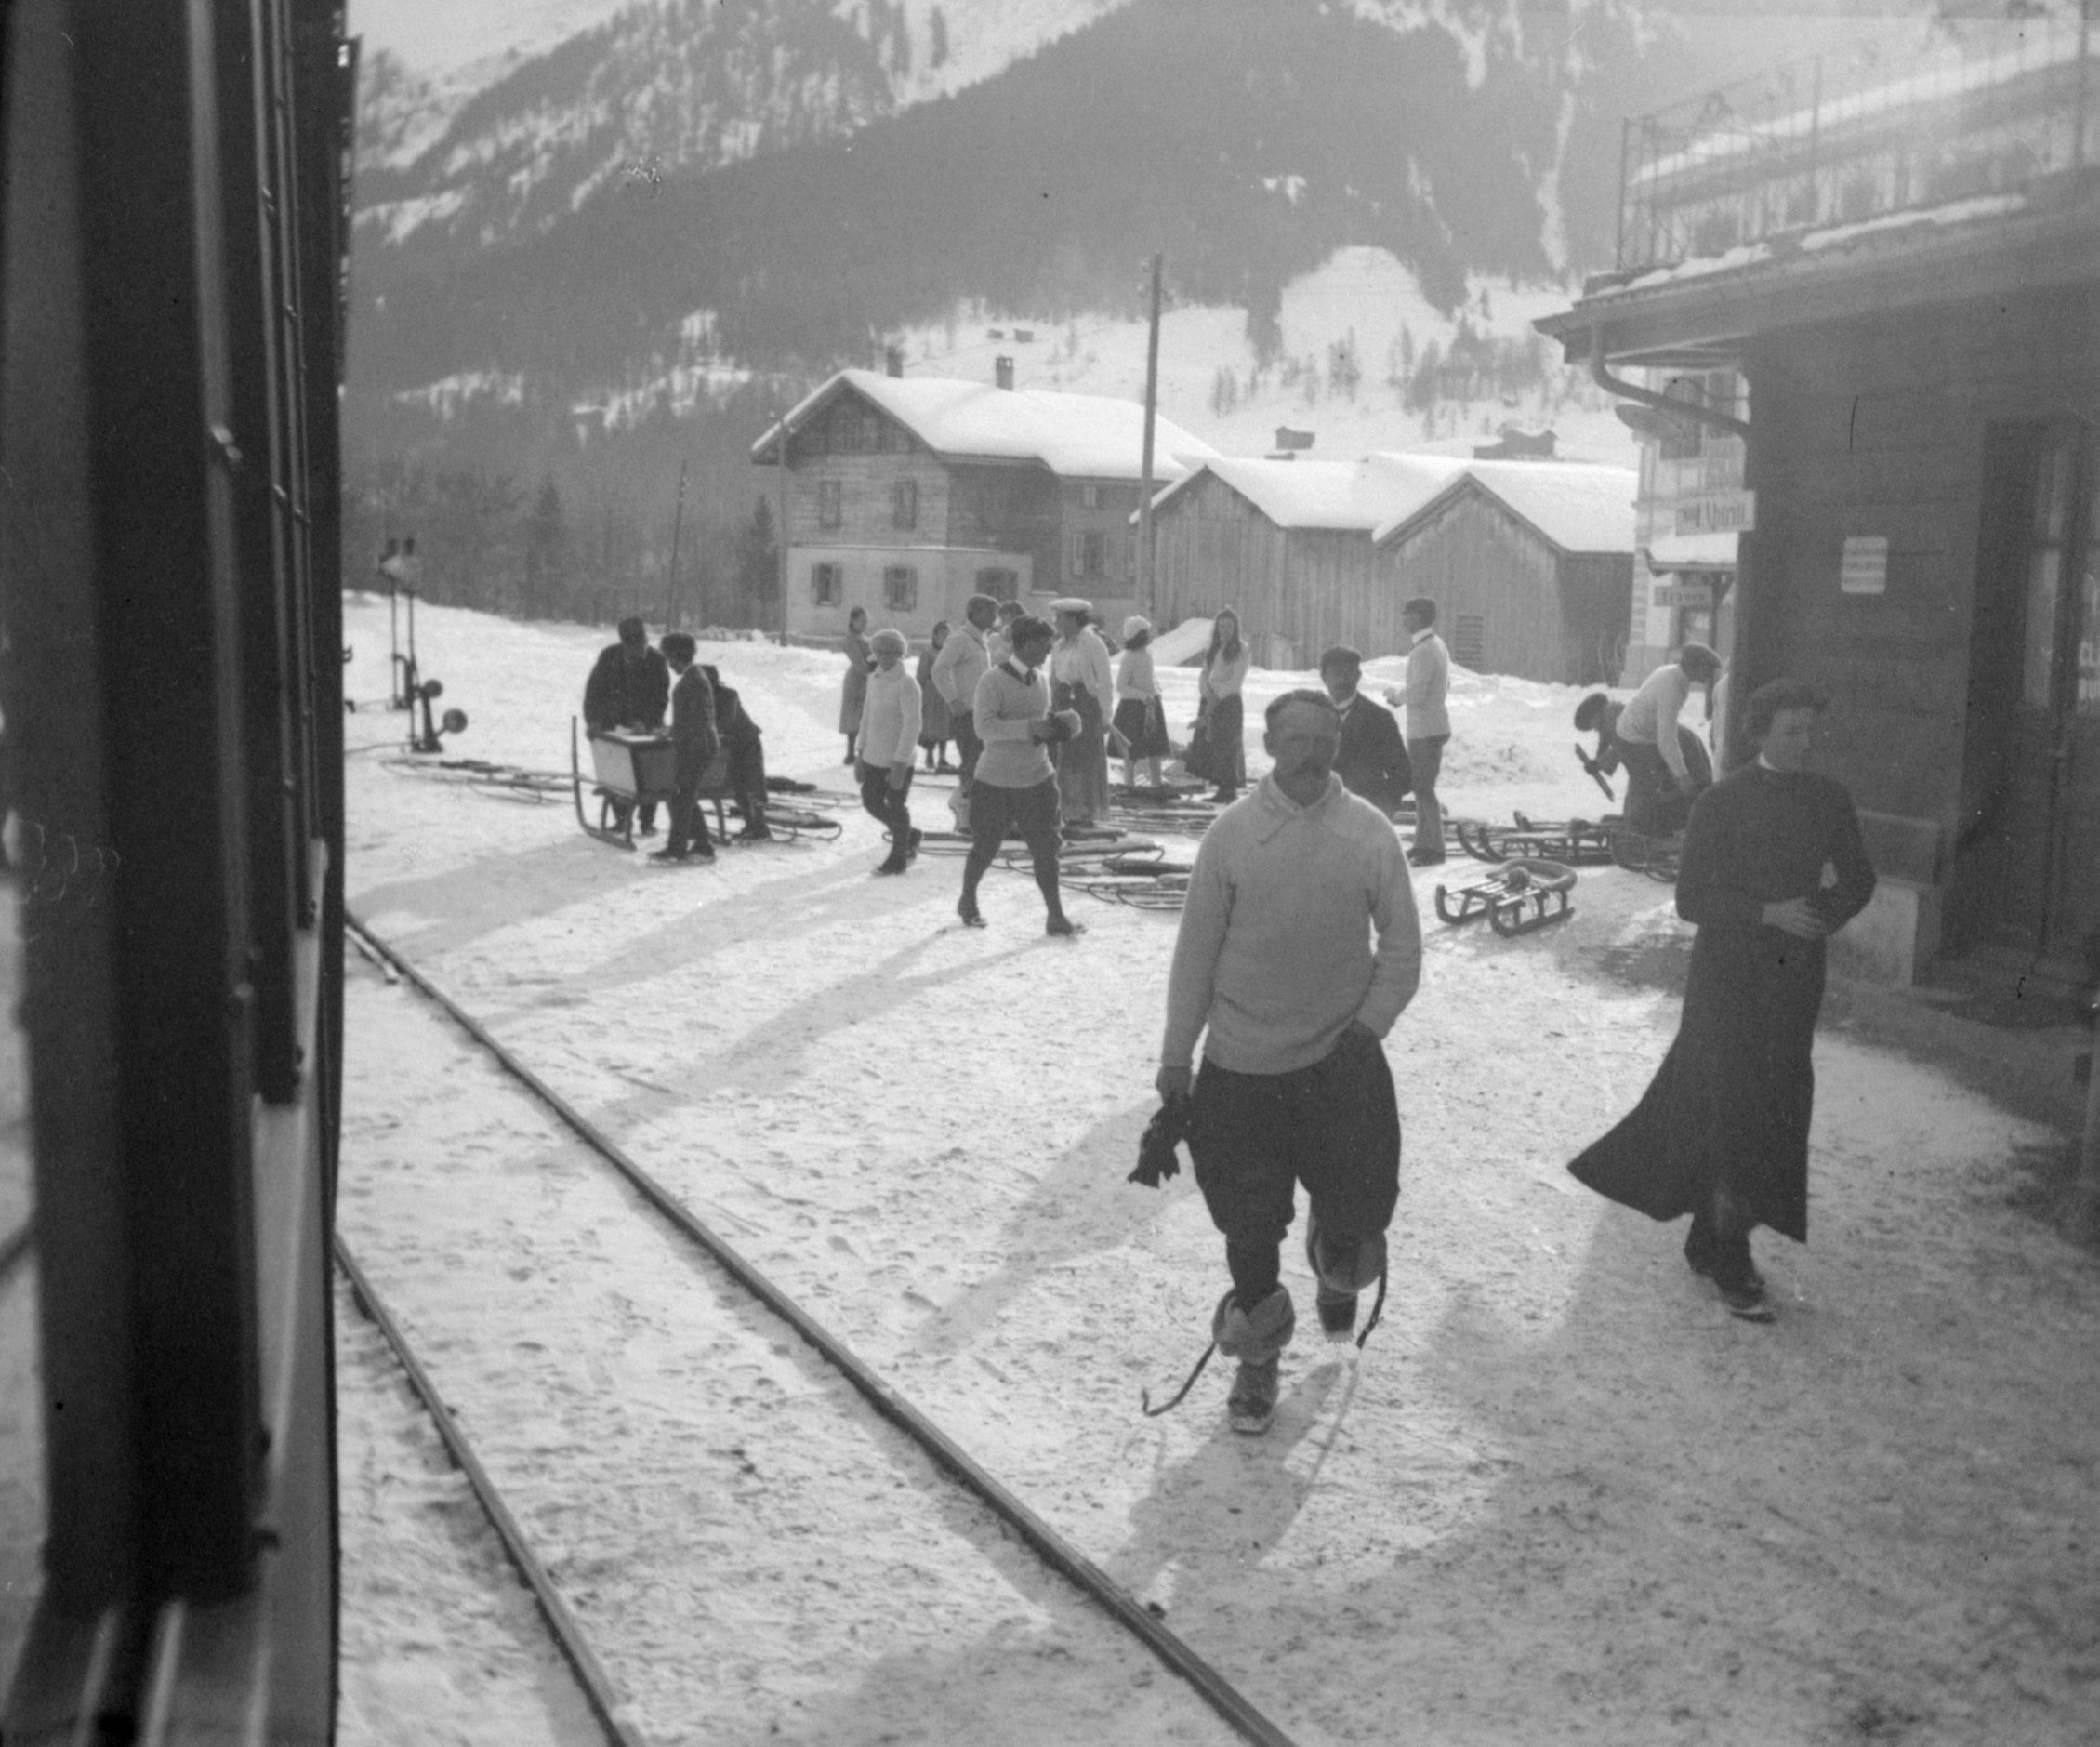 Wintersportler am Bahnhof Klosters Platz (04.01.1904), 87463 sn R_o.jpg (DRM CC BY-NC-SA)